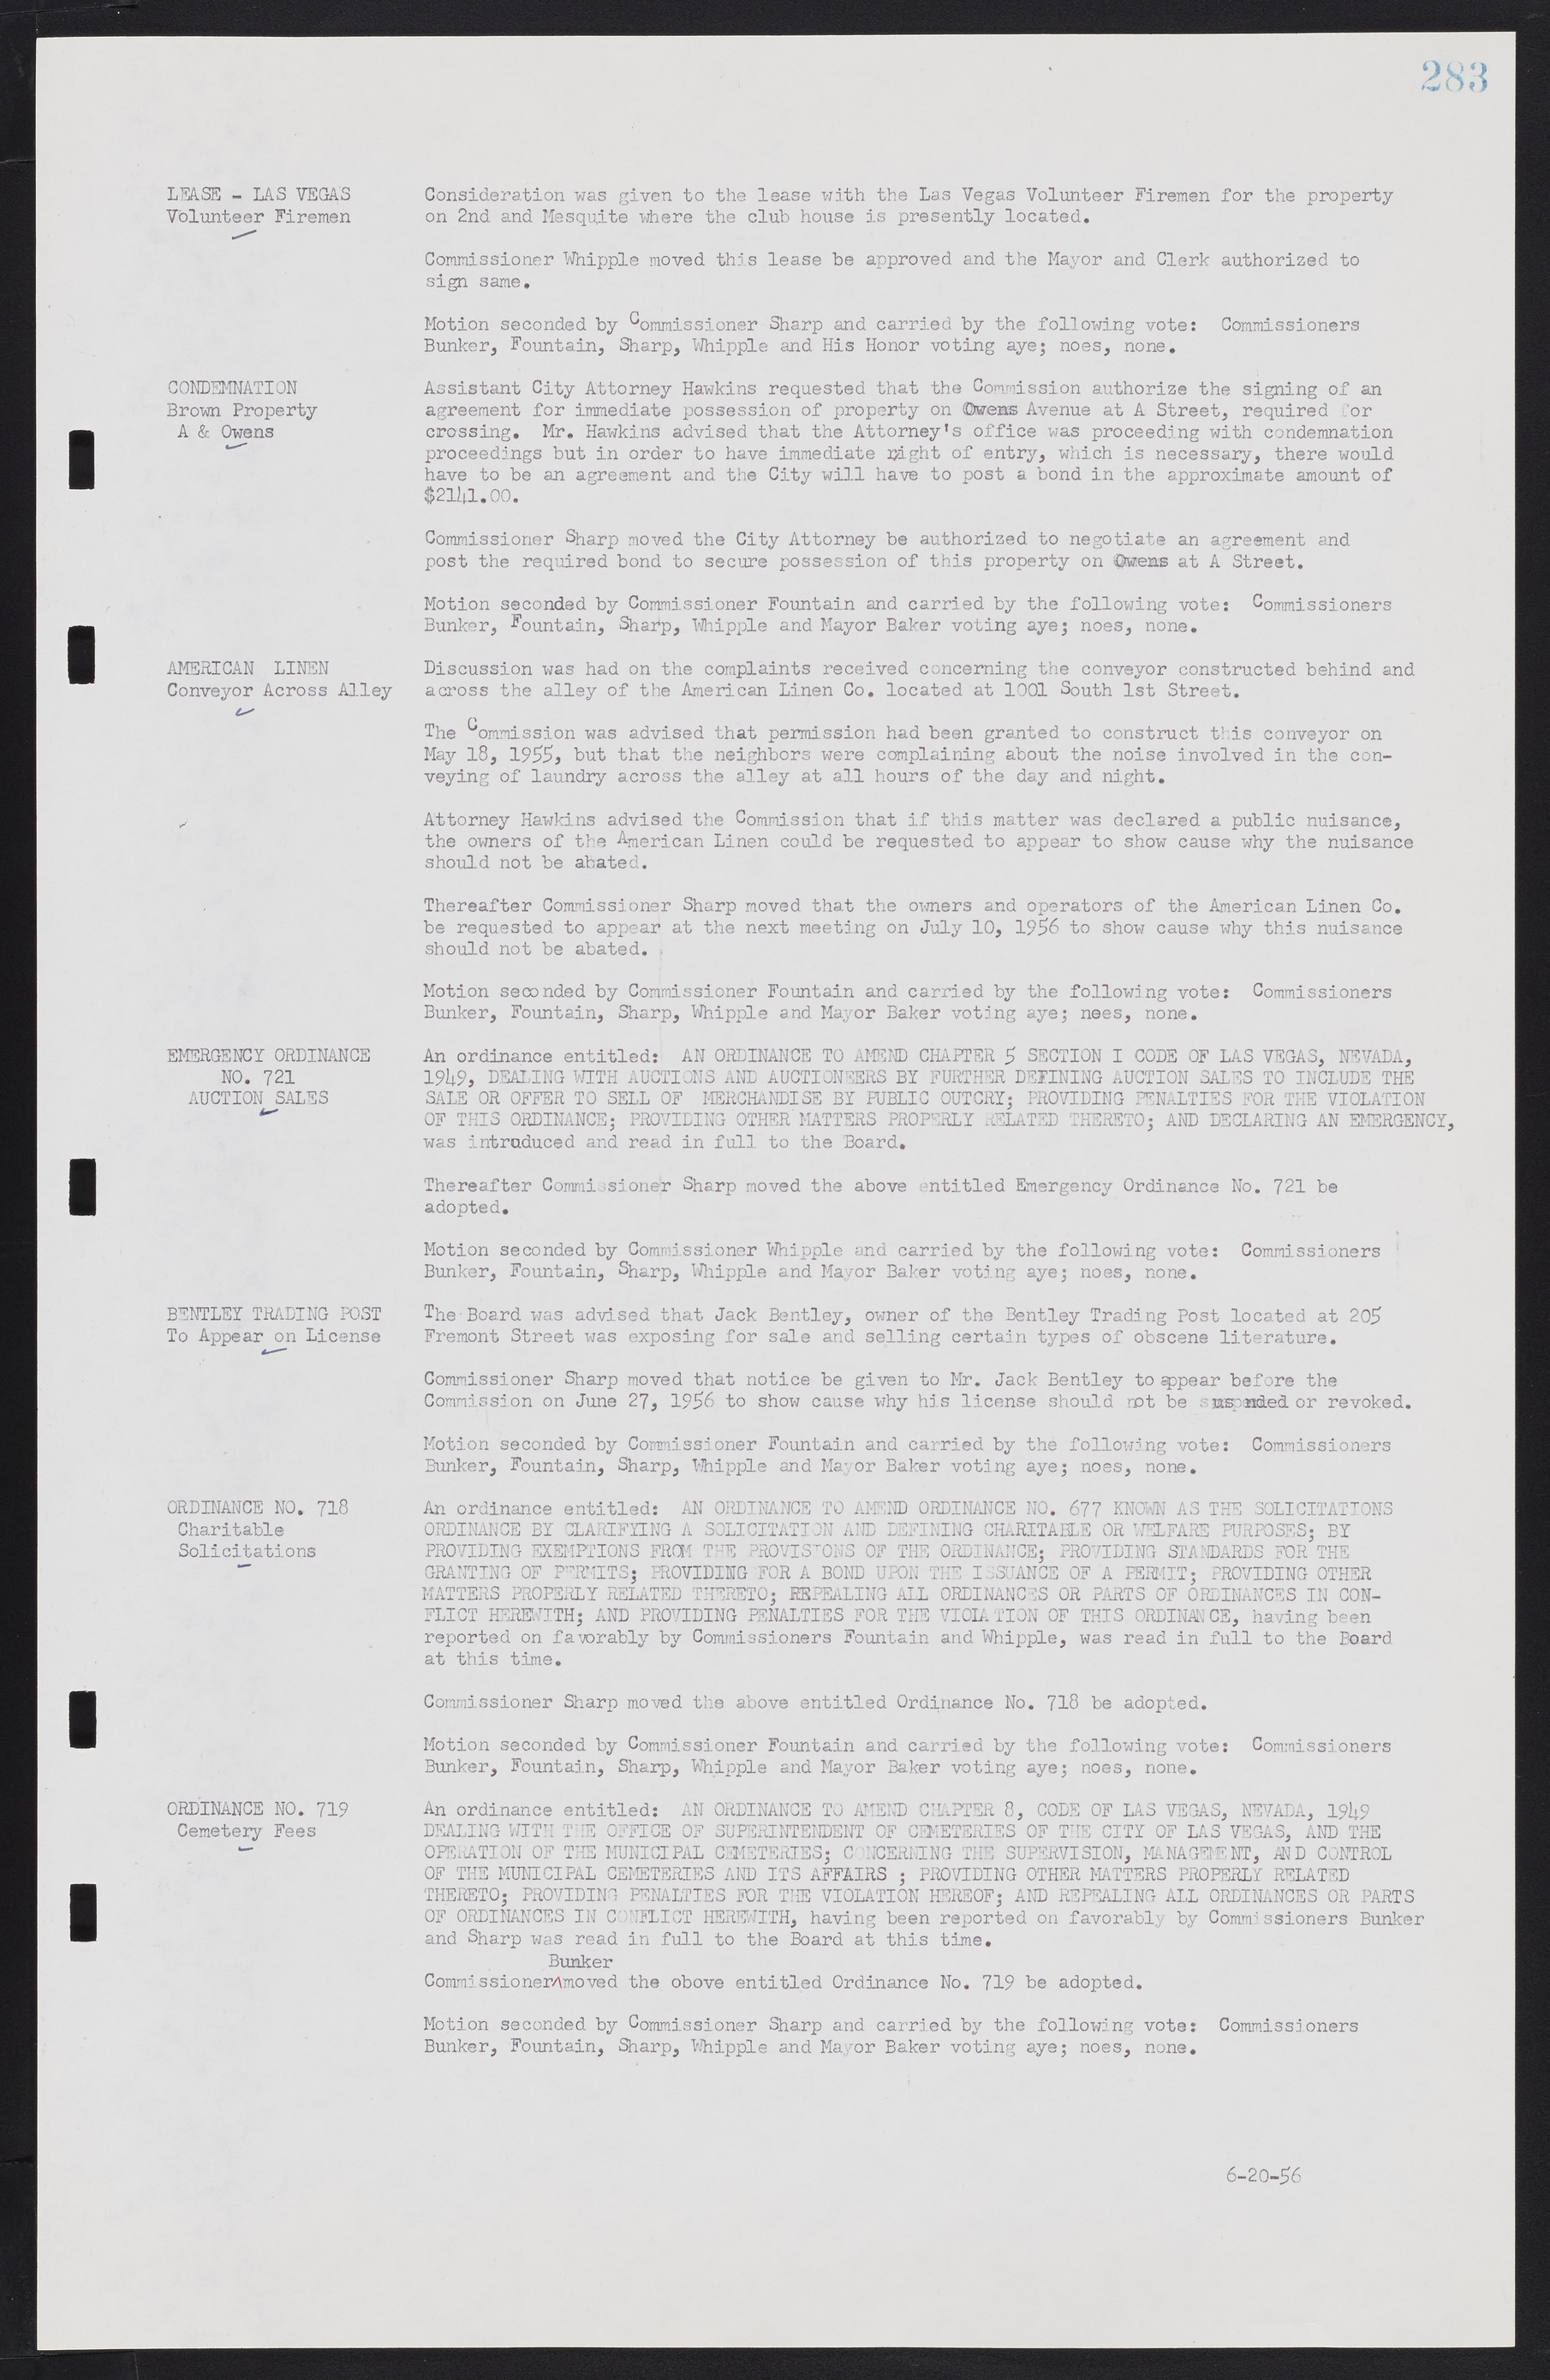 Las Vegas City Commission Minutes, September 21, 1955 to November 20, 1957, lvc000010-303